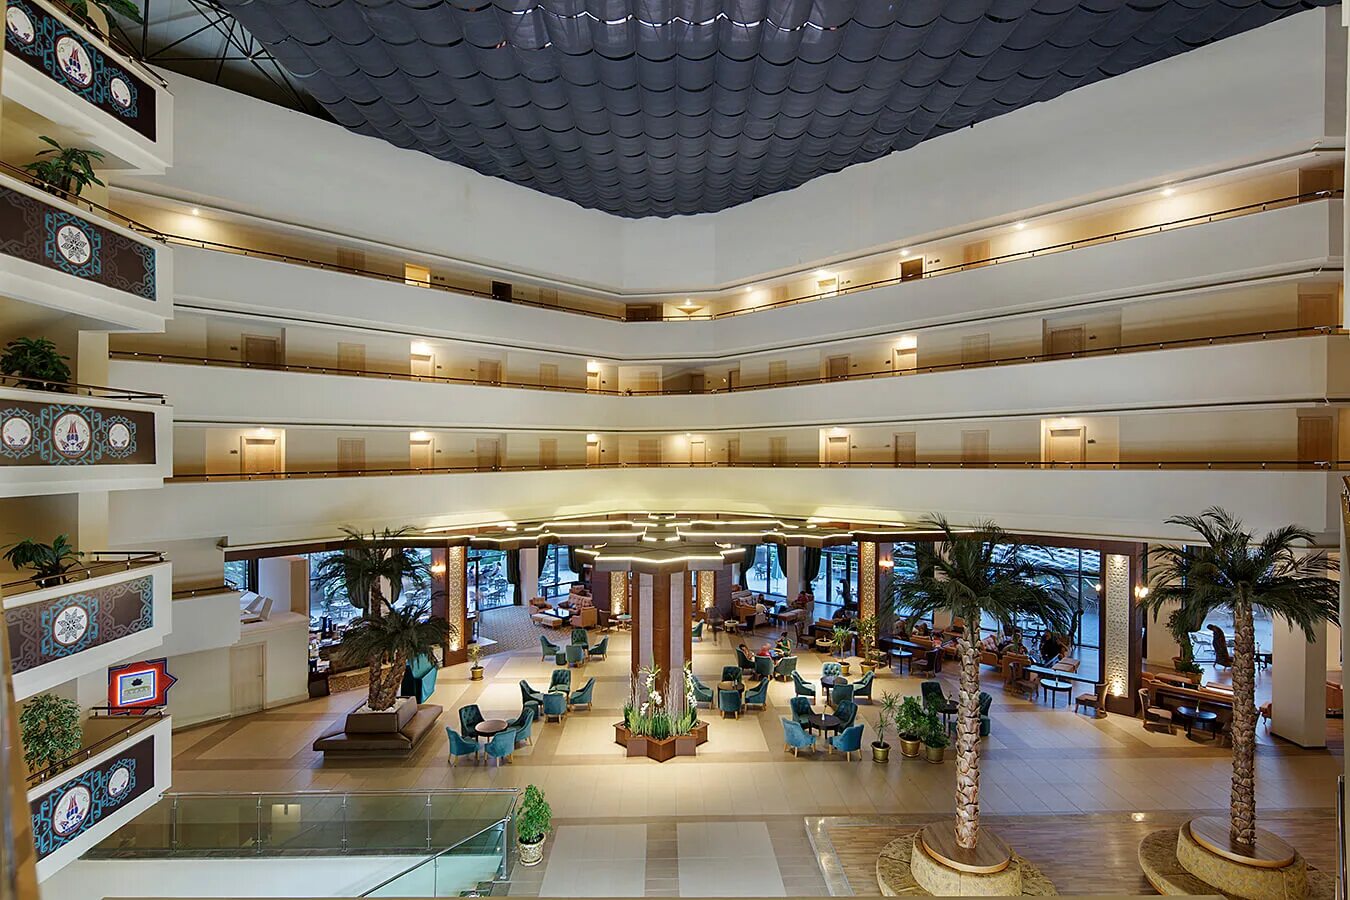 Nashira Resort Hotel Spa 5. Отель Турции Nashira Resort Hotel Aqua Spa. Nashira Resort Hotel Spa 5 Турция Сиде. Сиде отель Нашира спа.